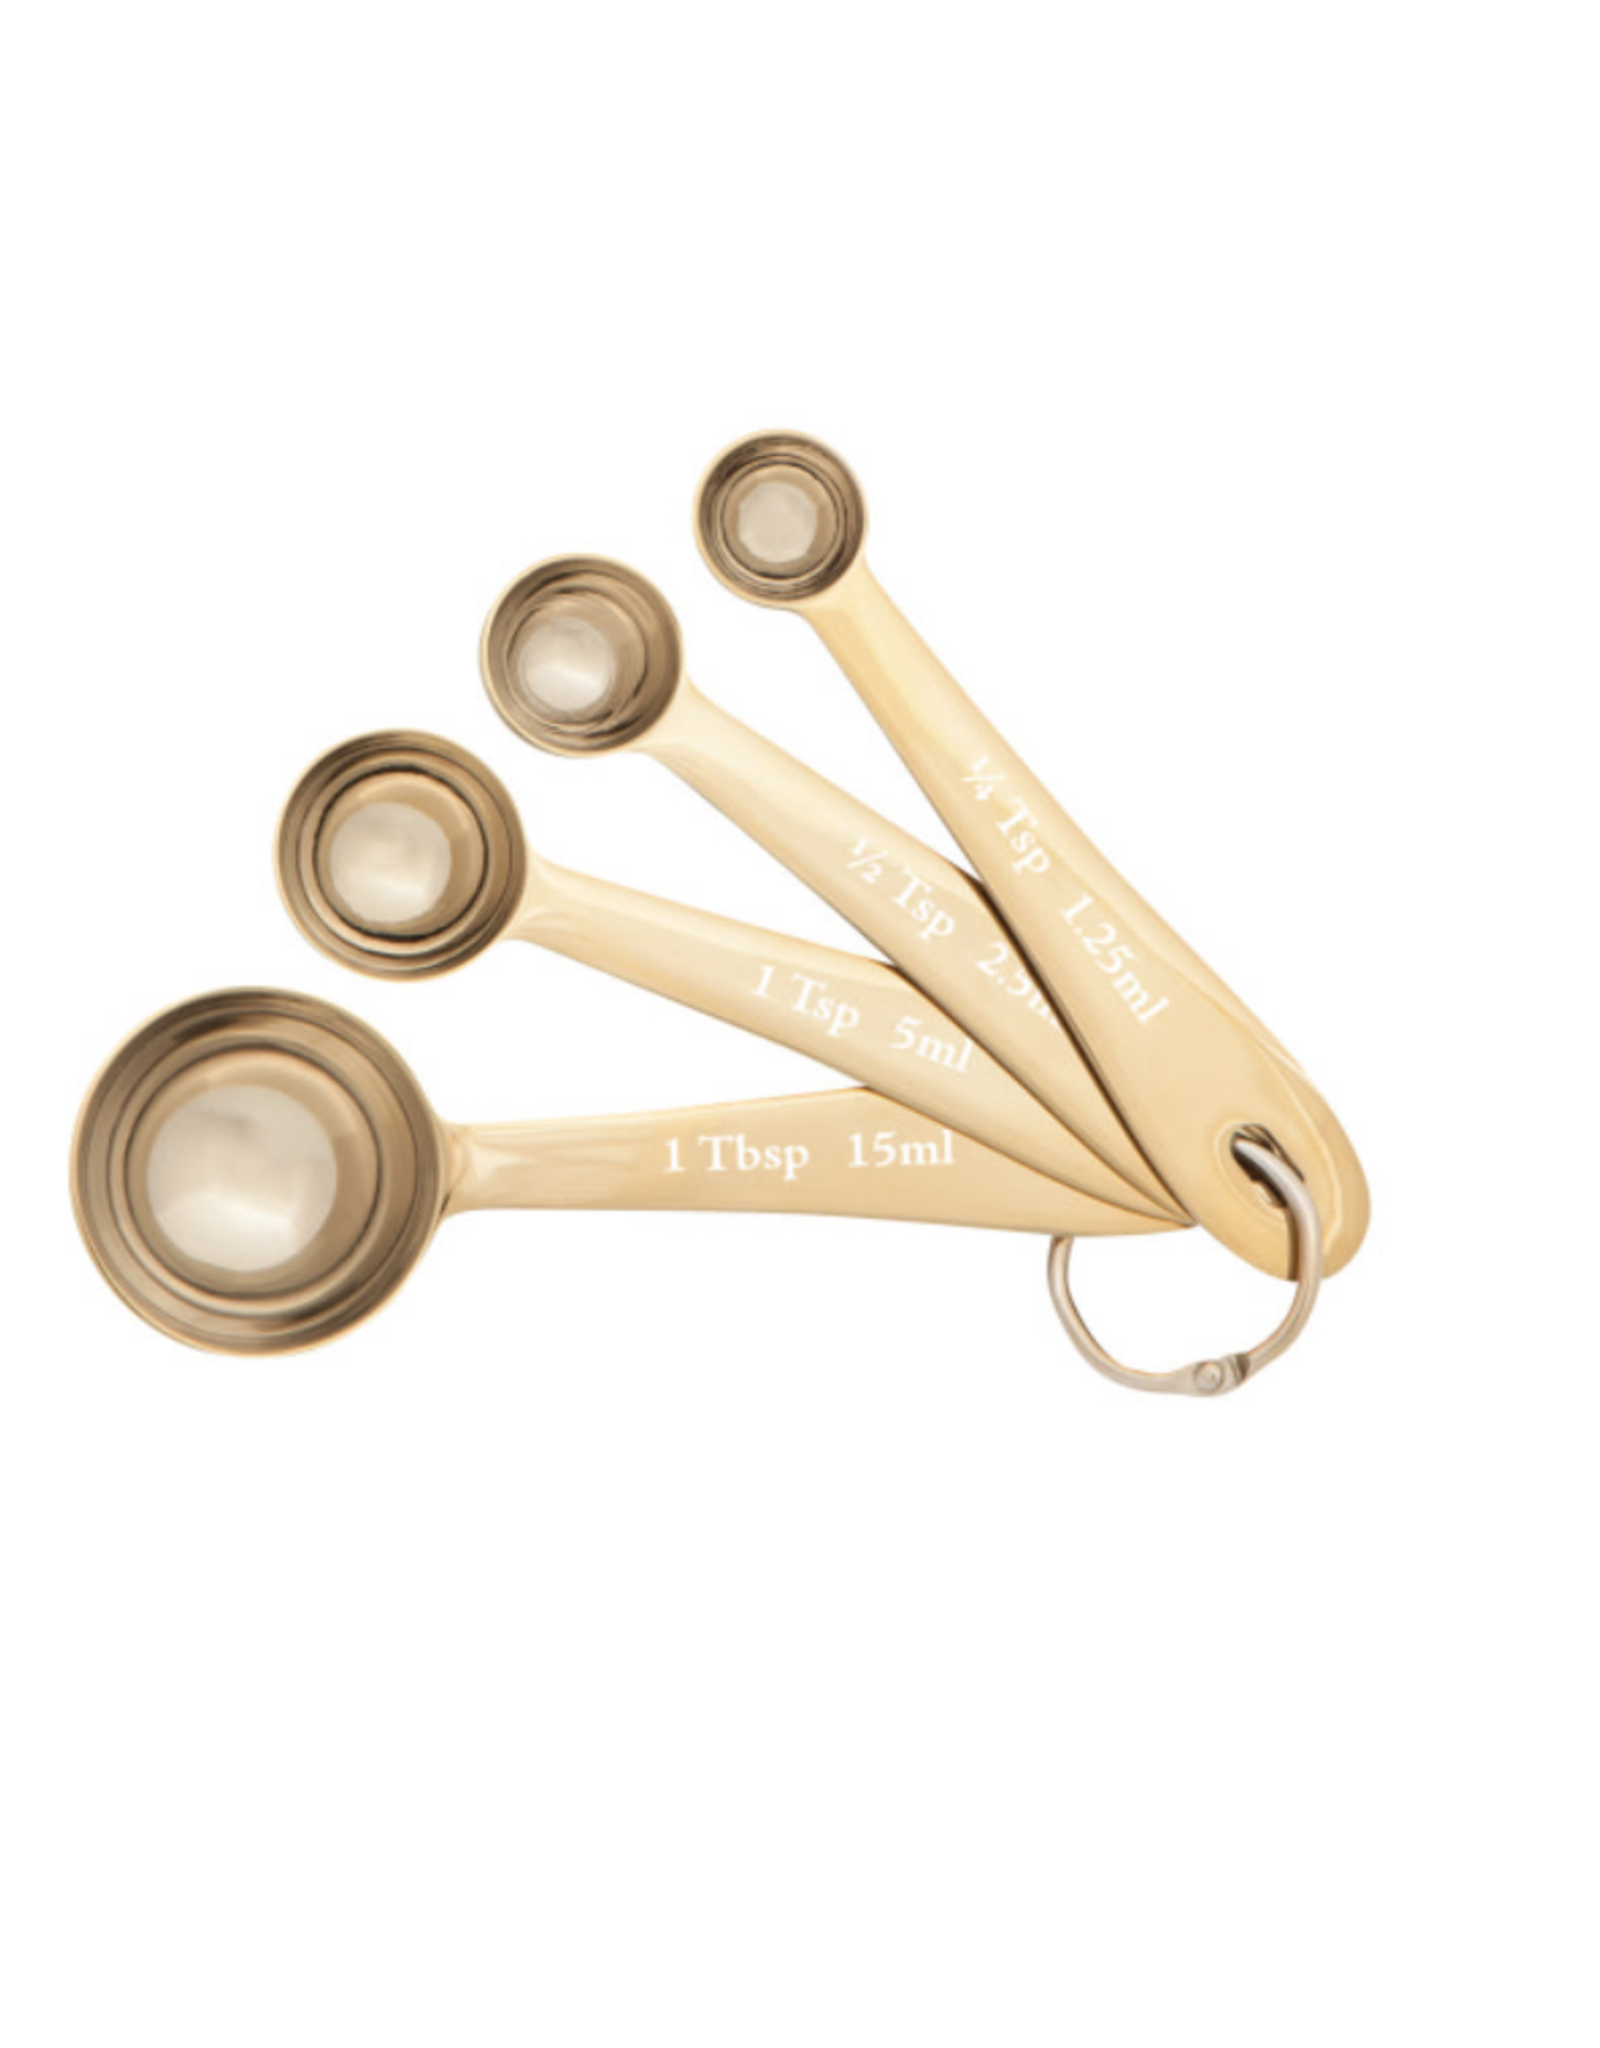 DCA - Measuring Spoon Set / Set of 4, Gold